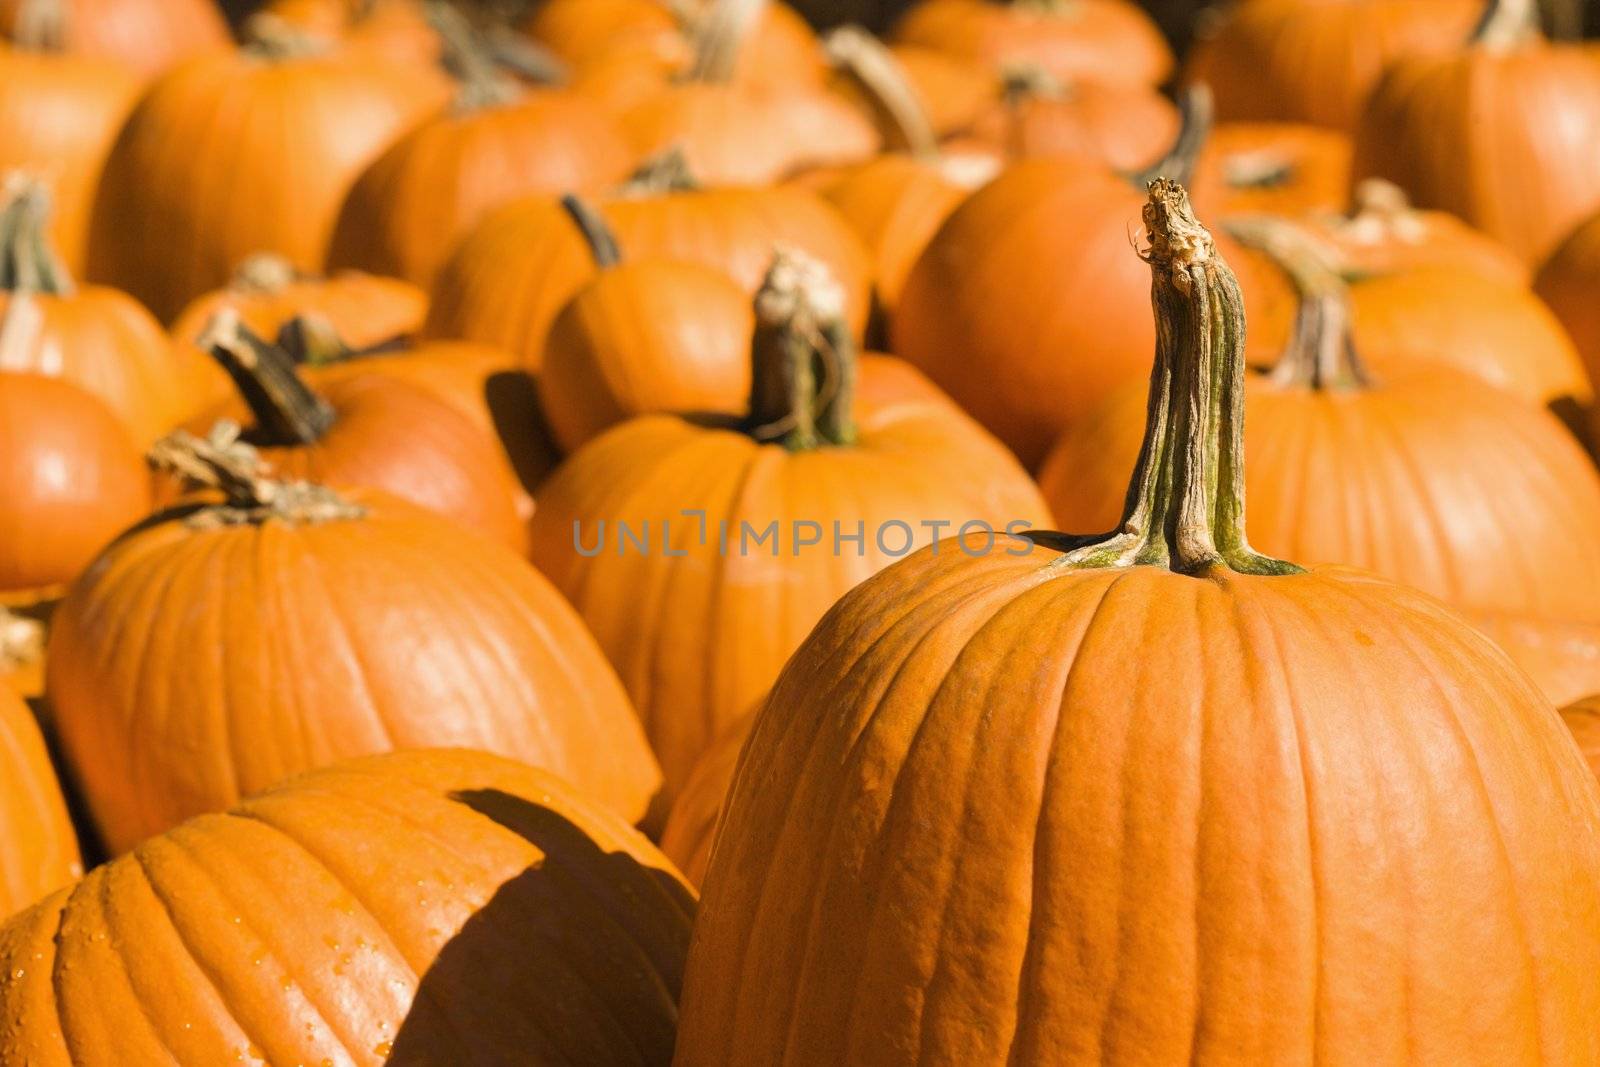 Group of pumpkins at produce market.